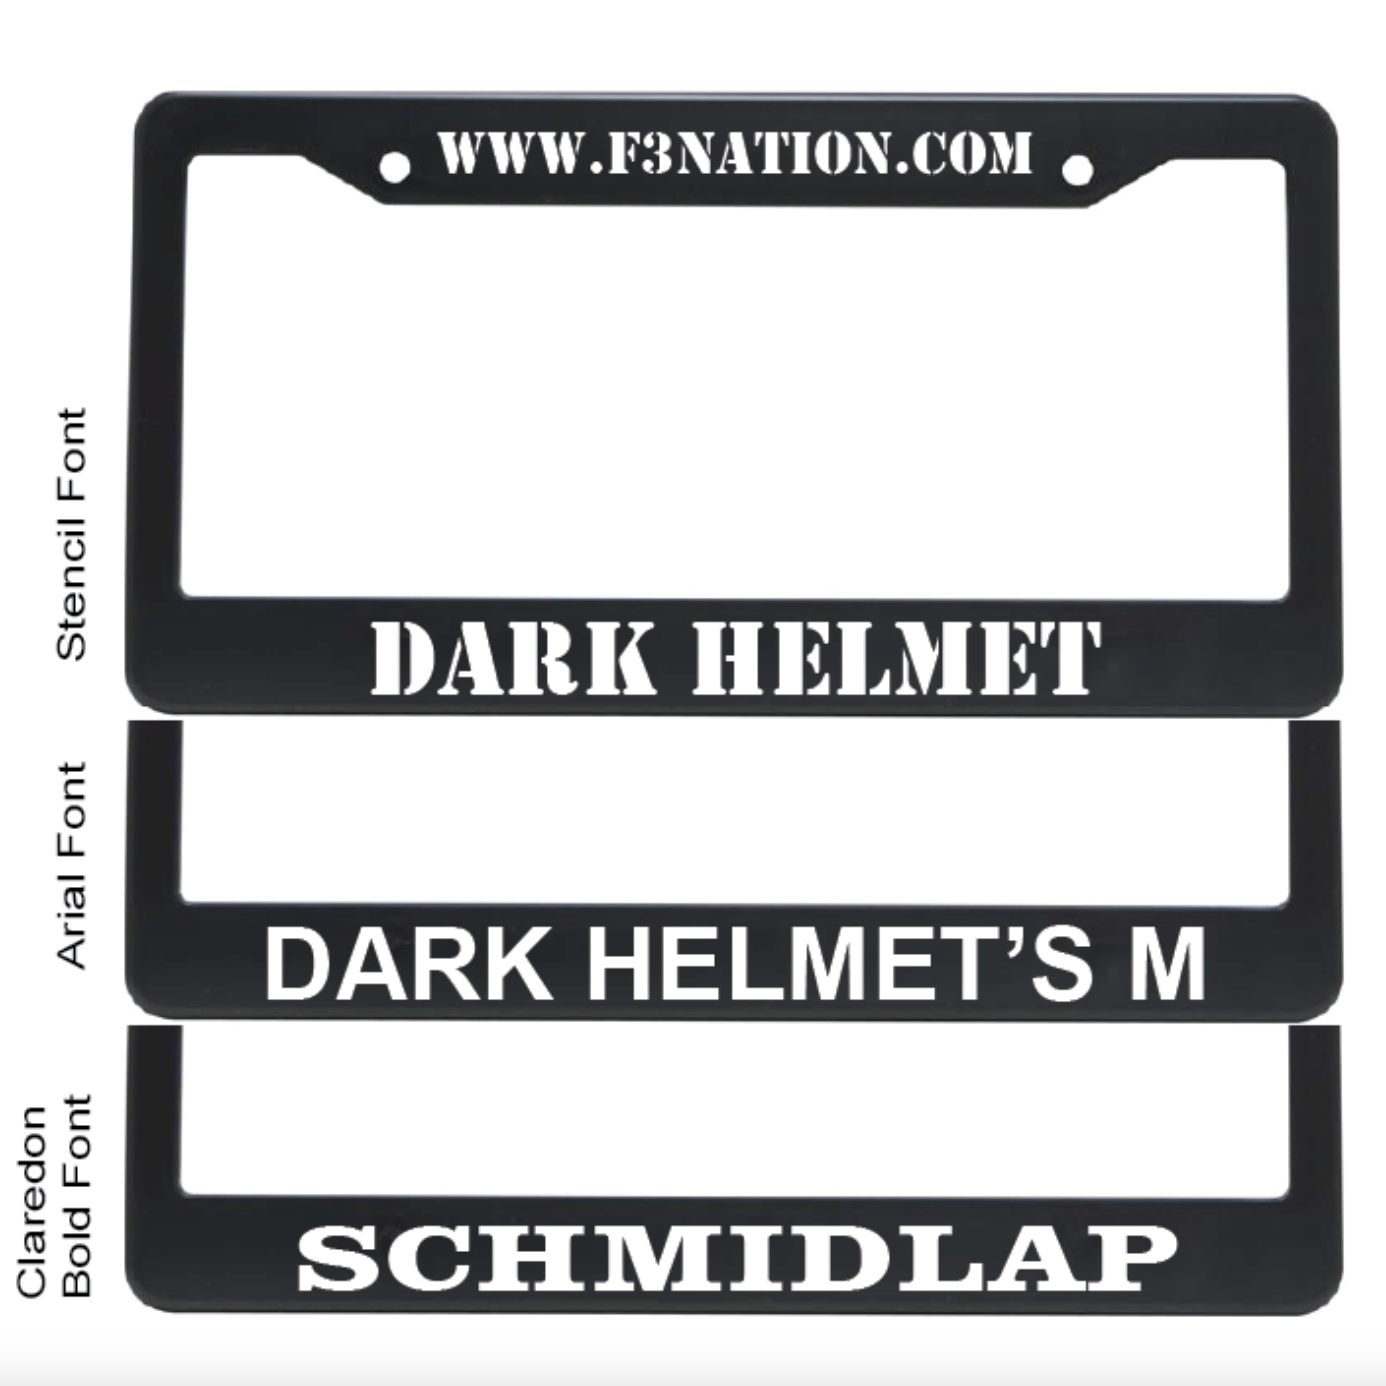 F3 Custom Name Metal License Plate Frame - Made to Order